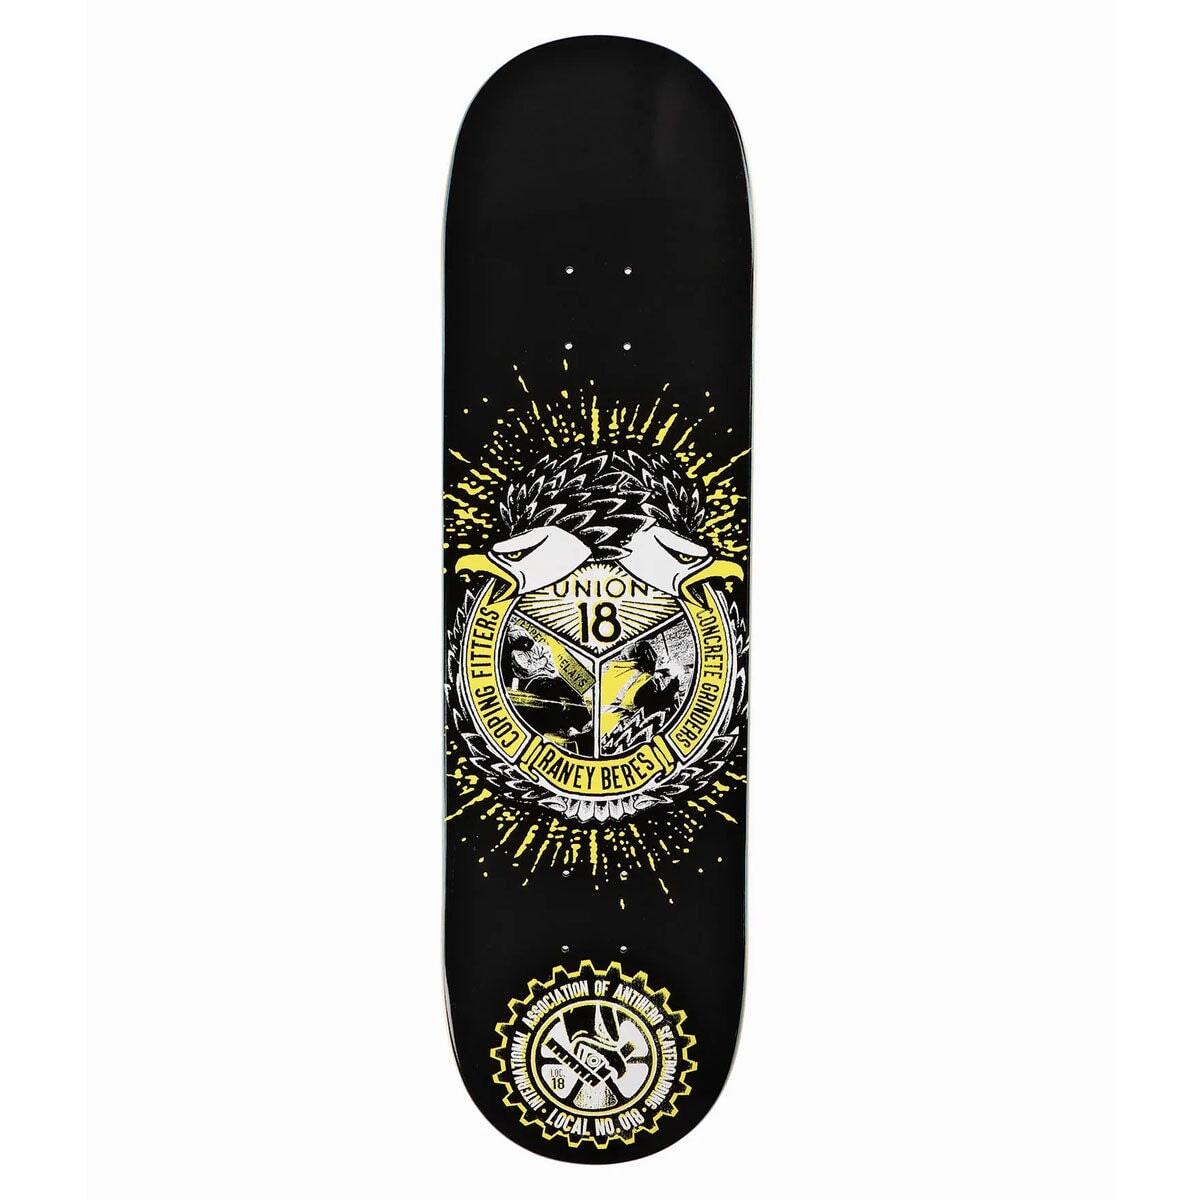 Antihero Raney Beres Local 18 Union Deck - 8,75" Decks Antihero Skateboards 